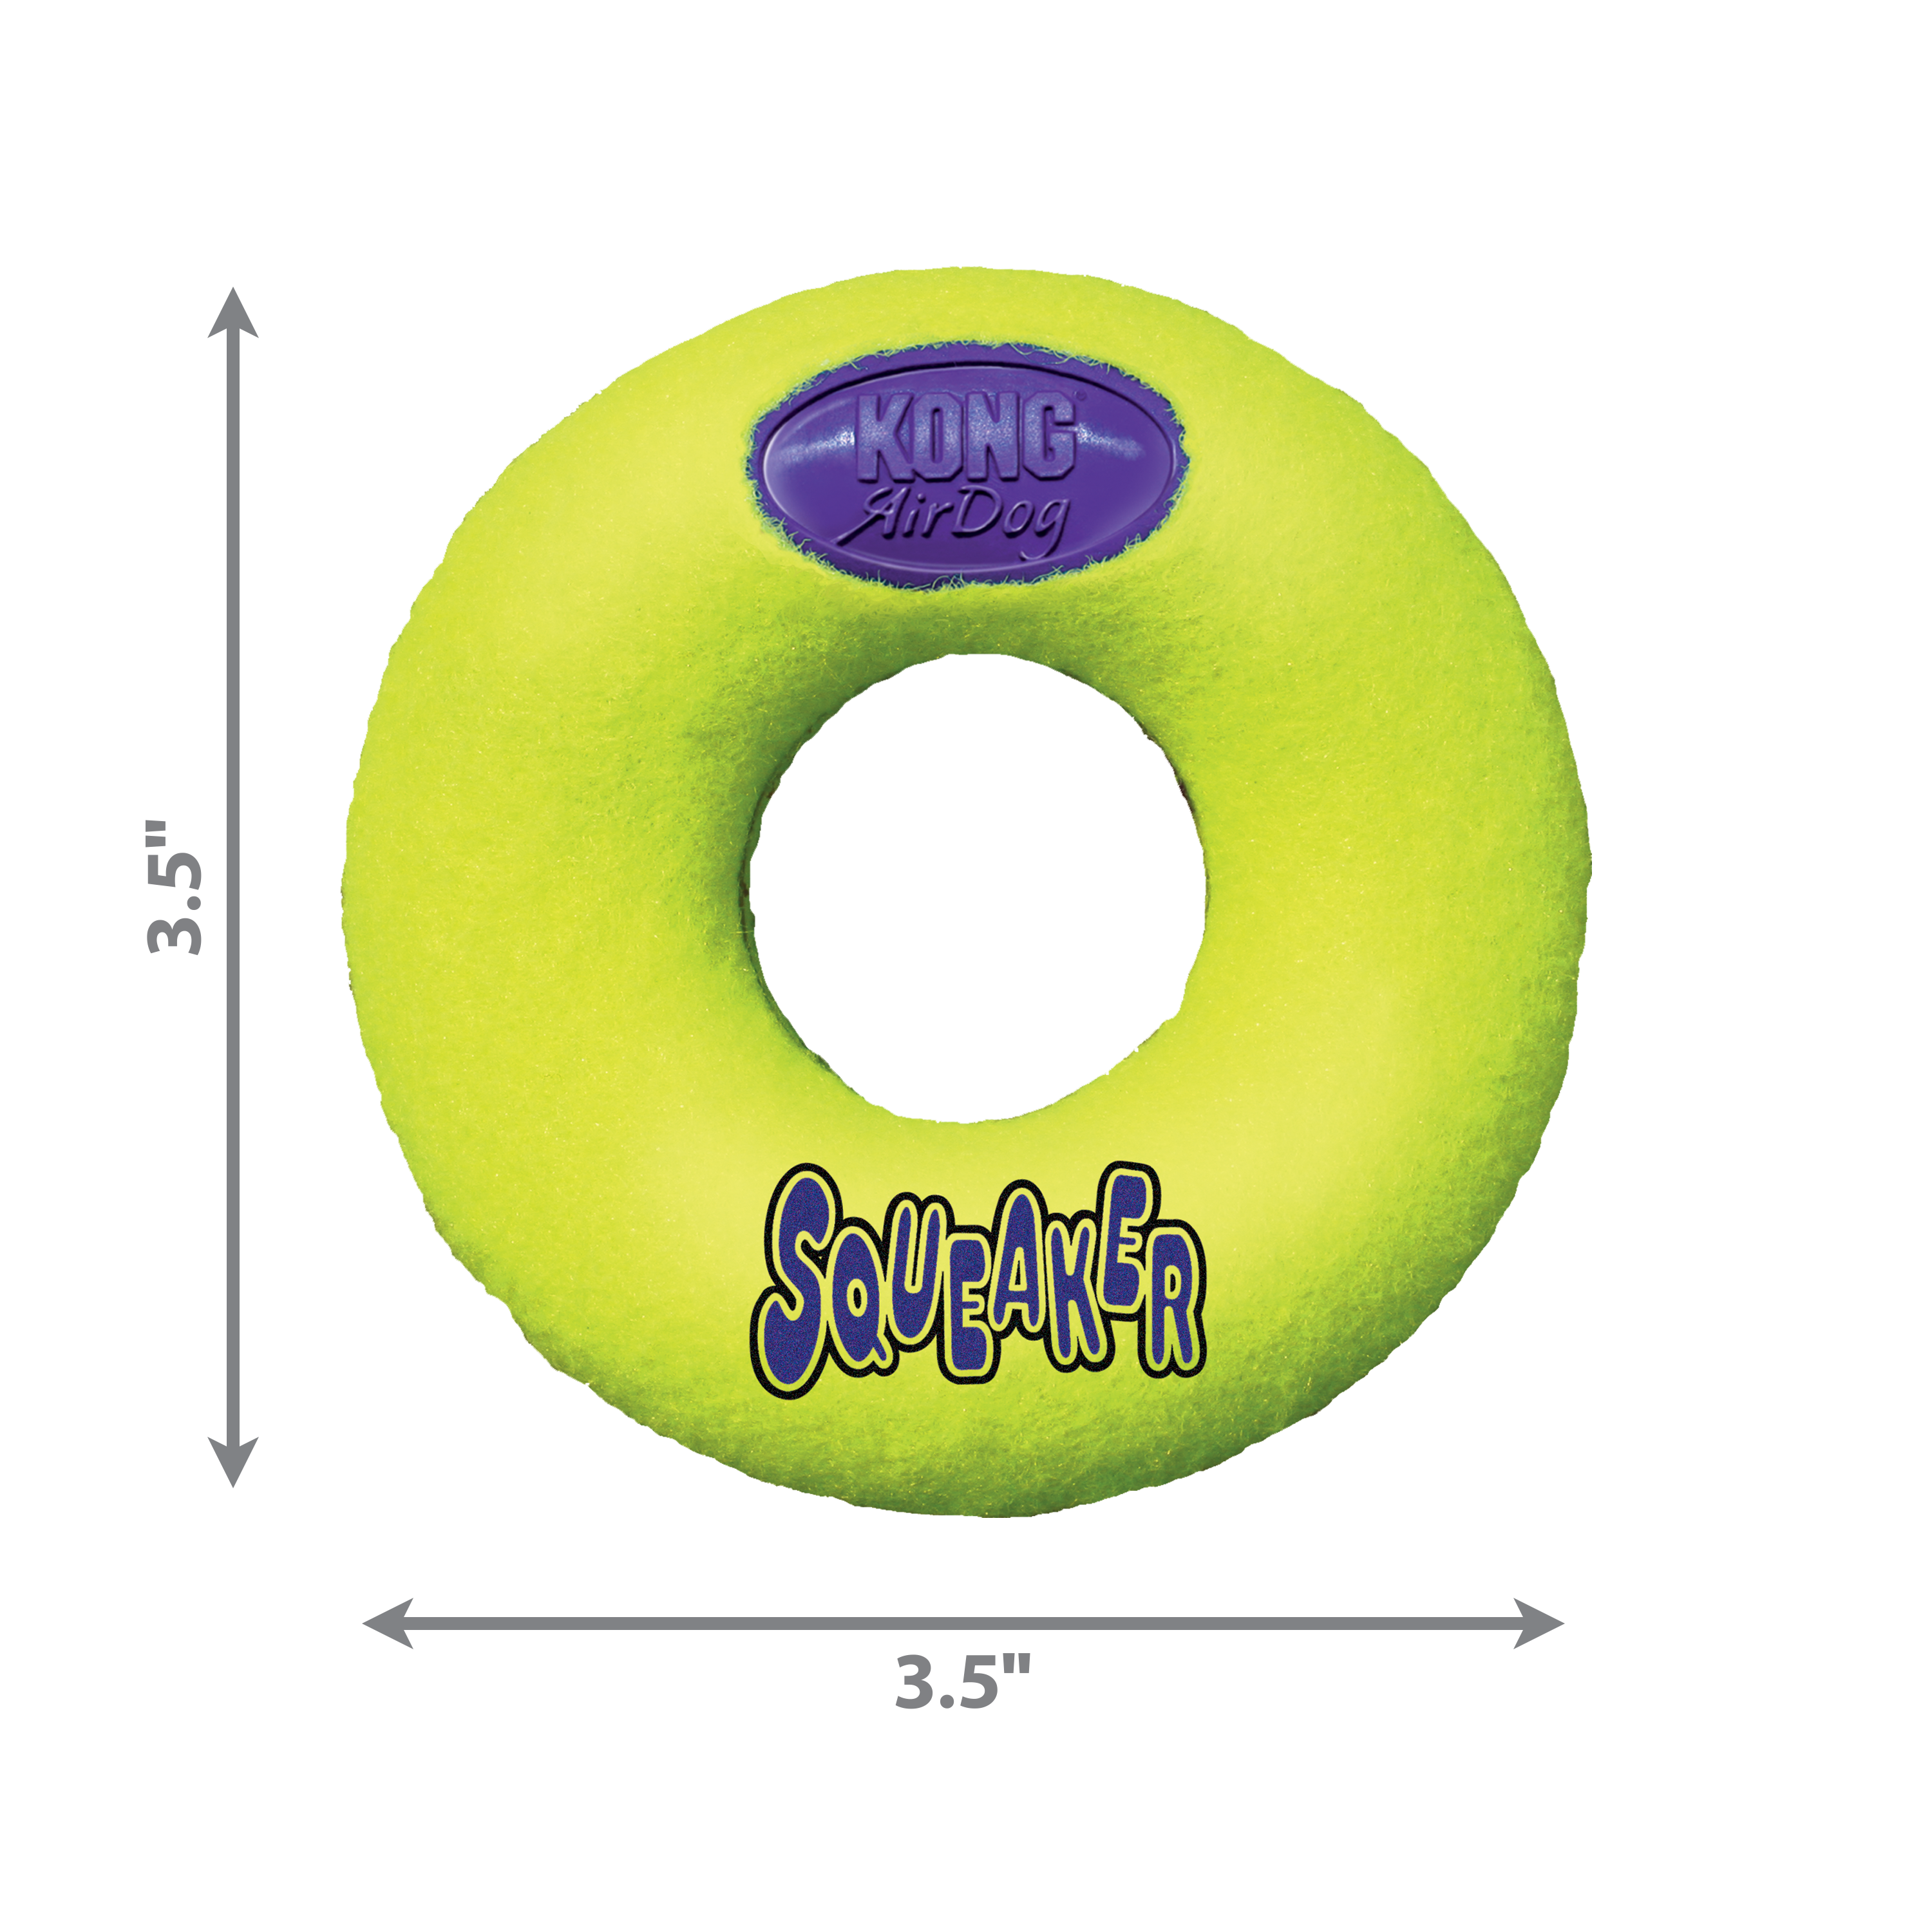 AirDog Squeaker Donut dimoffpack imagen de producto